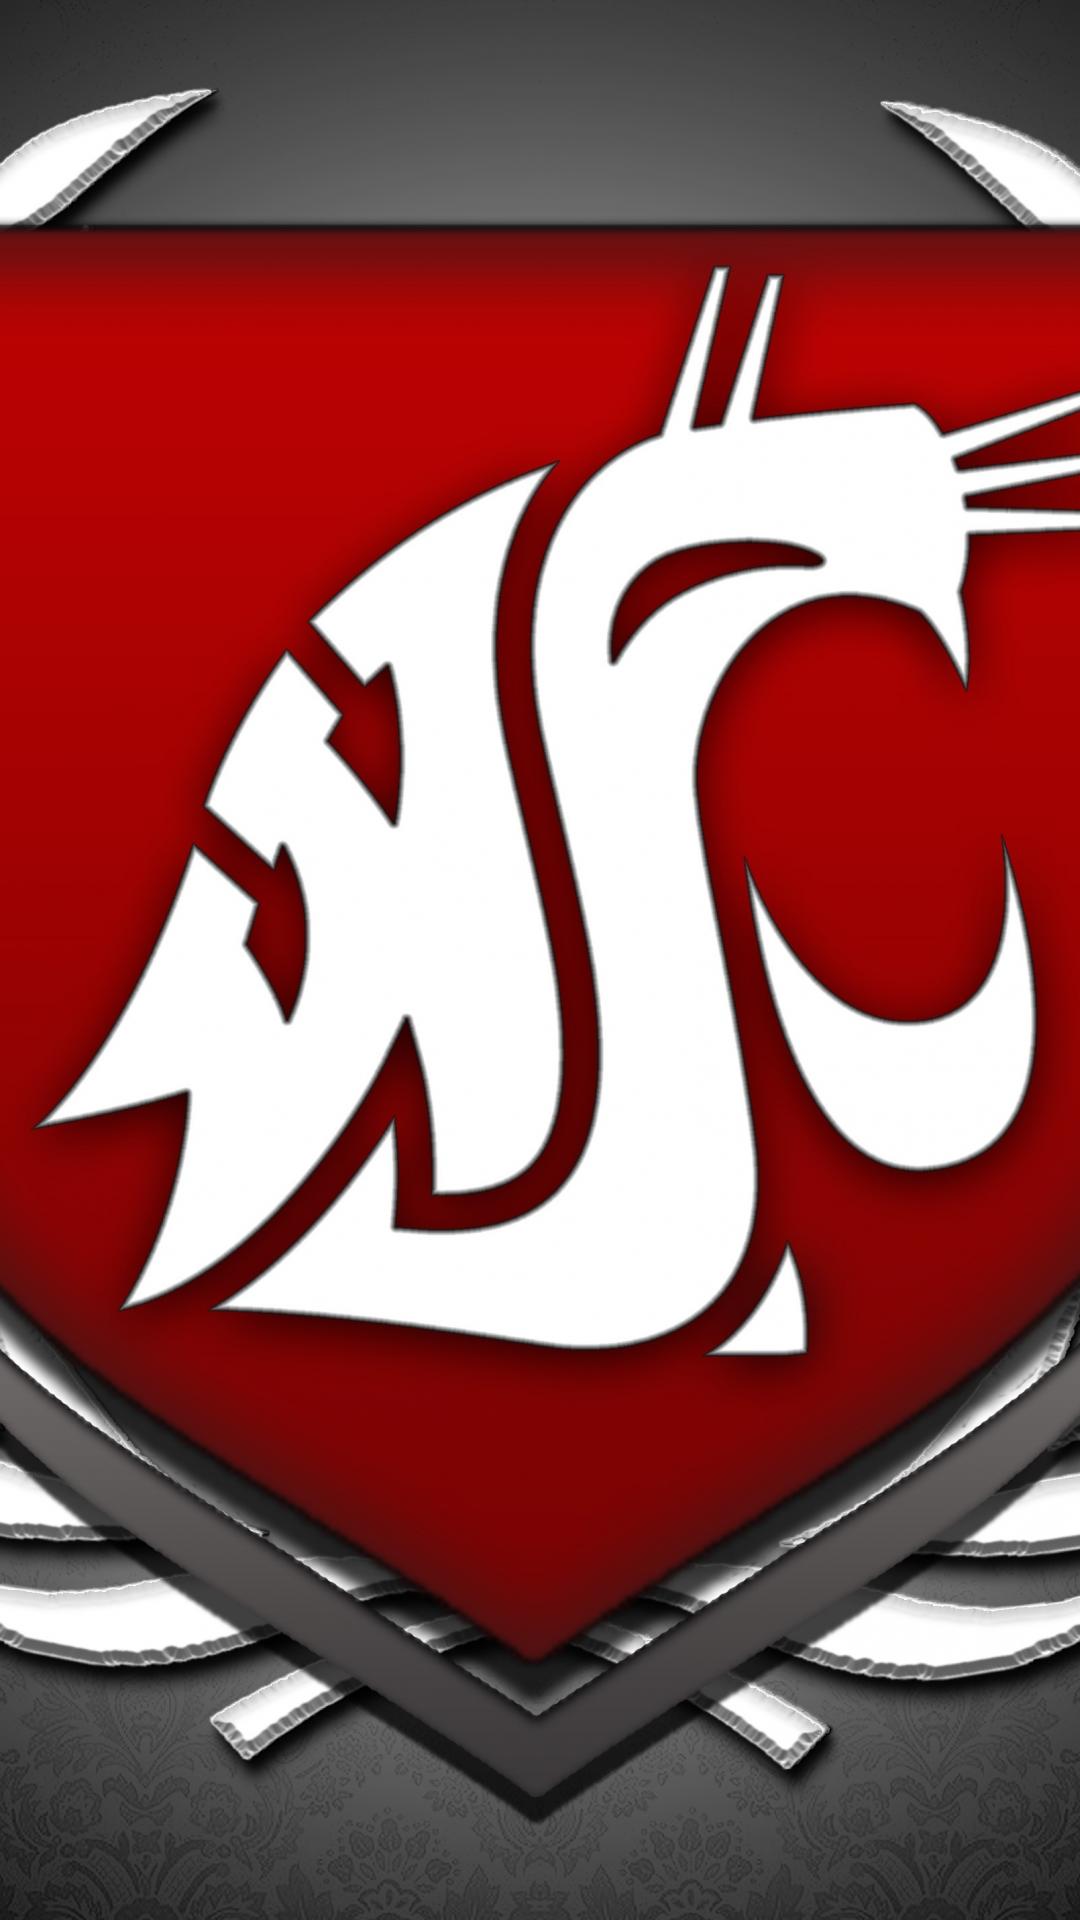 Wsu Washington State University Cougars Wallpaper